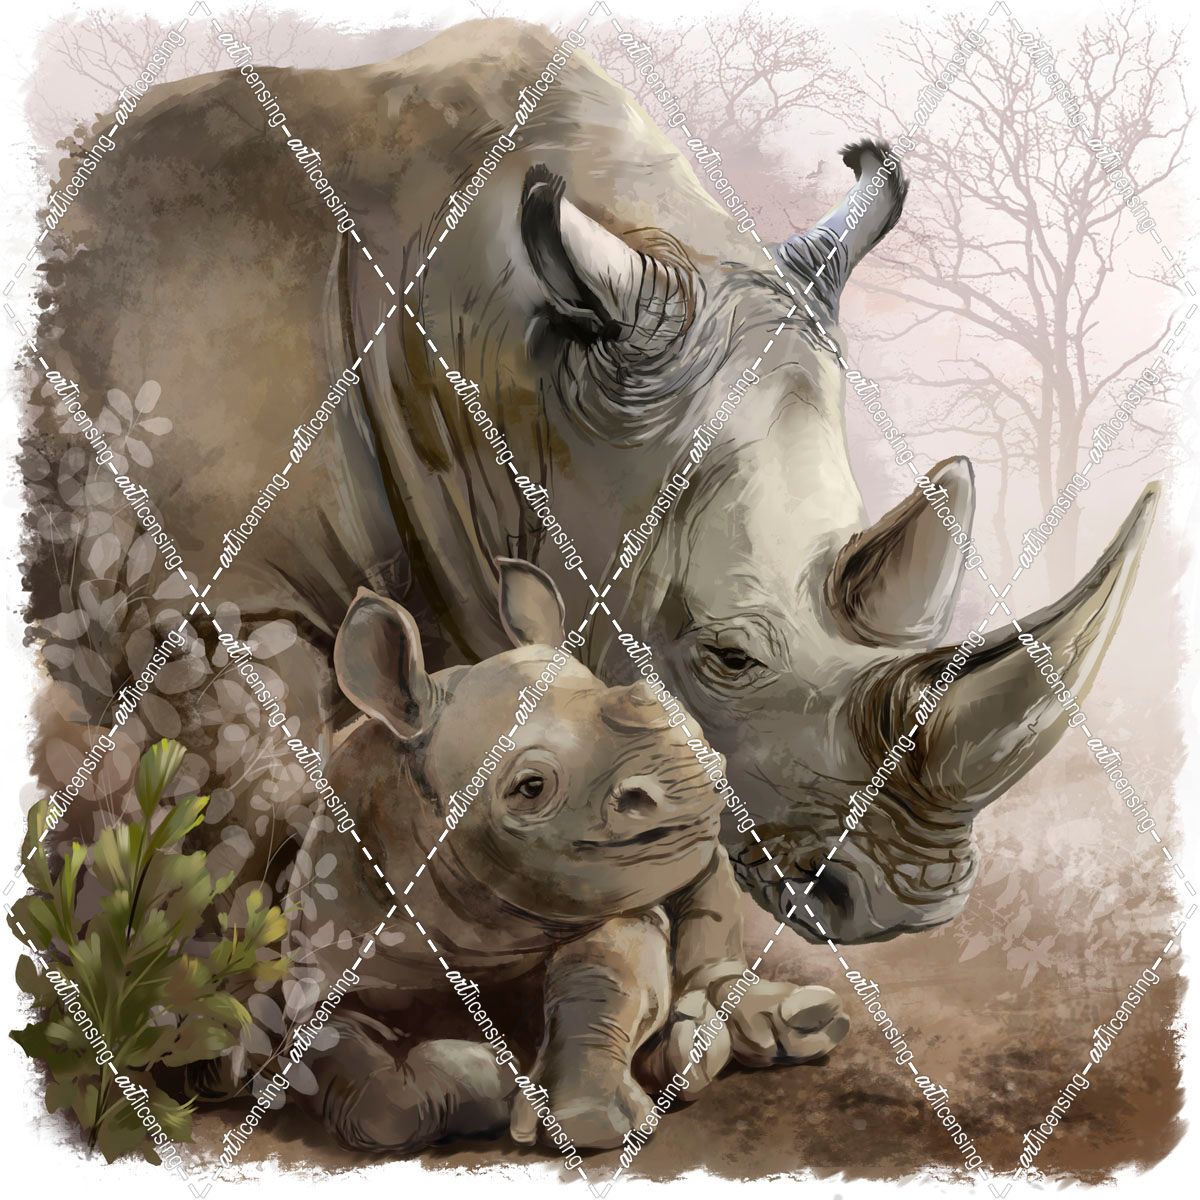 Rhinoceros And His Little Cub